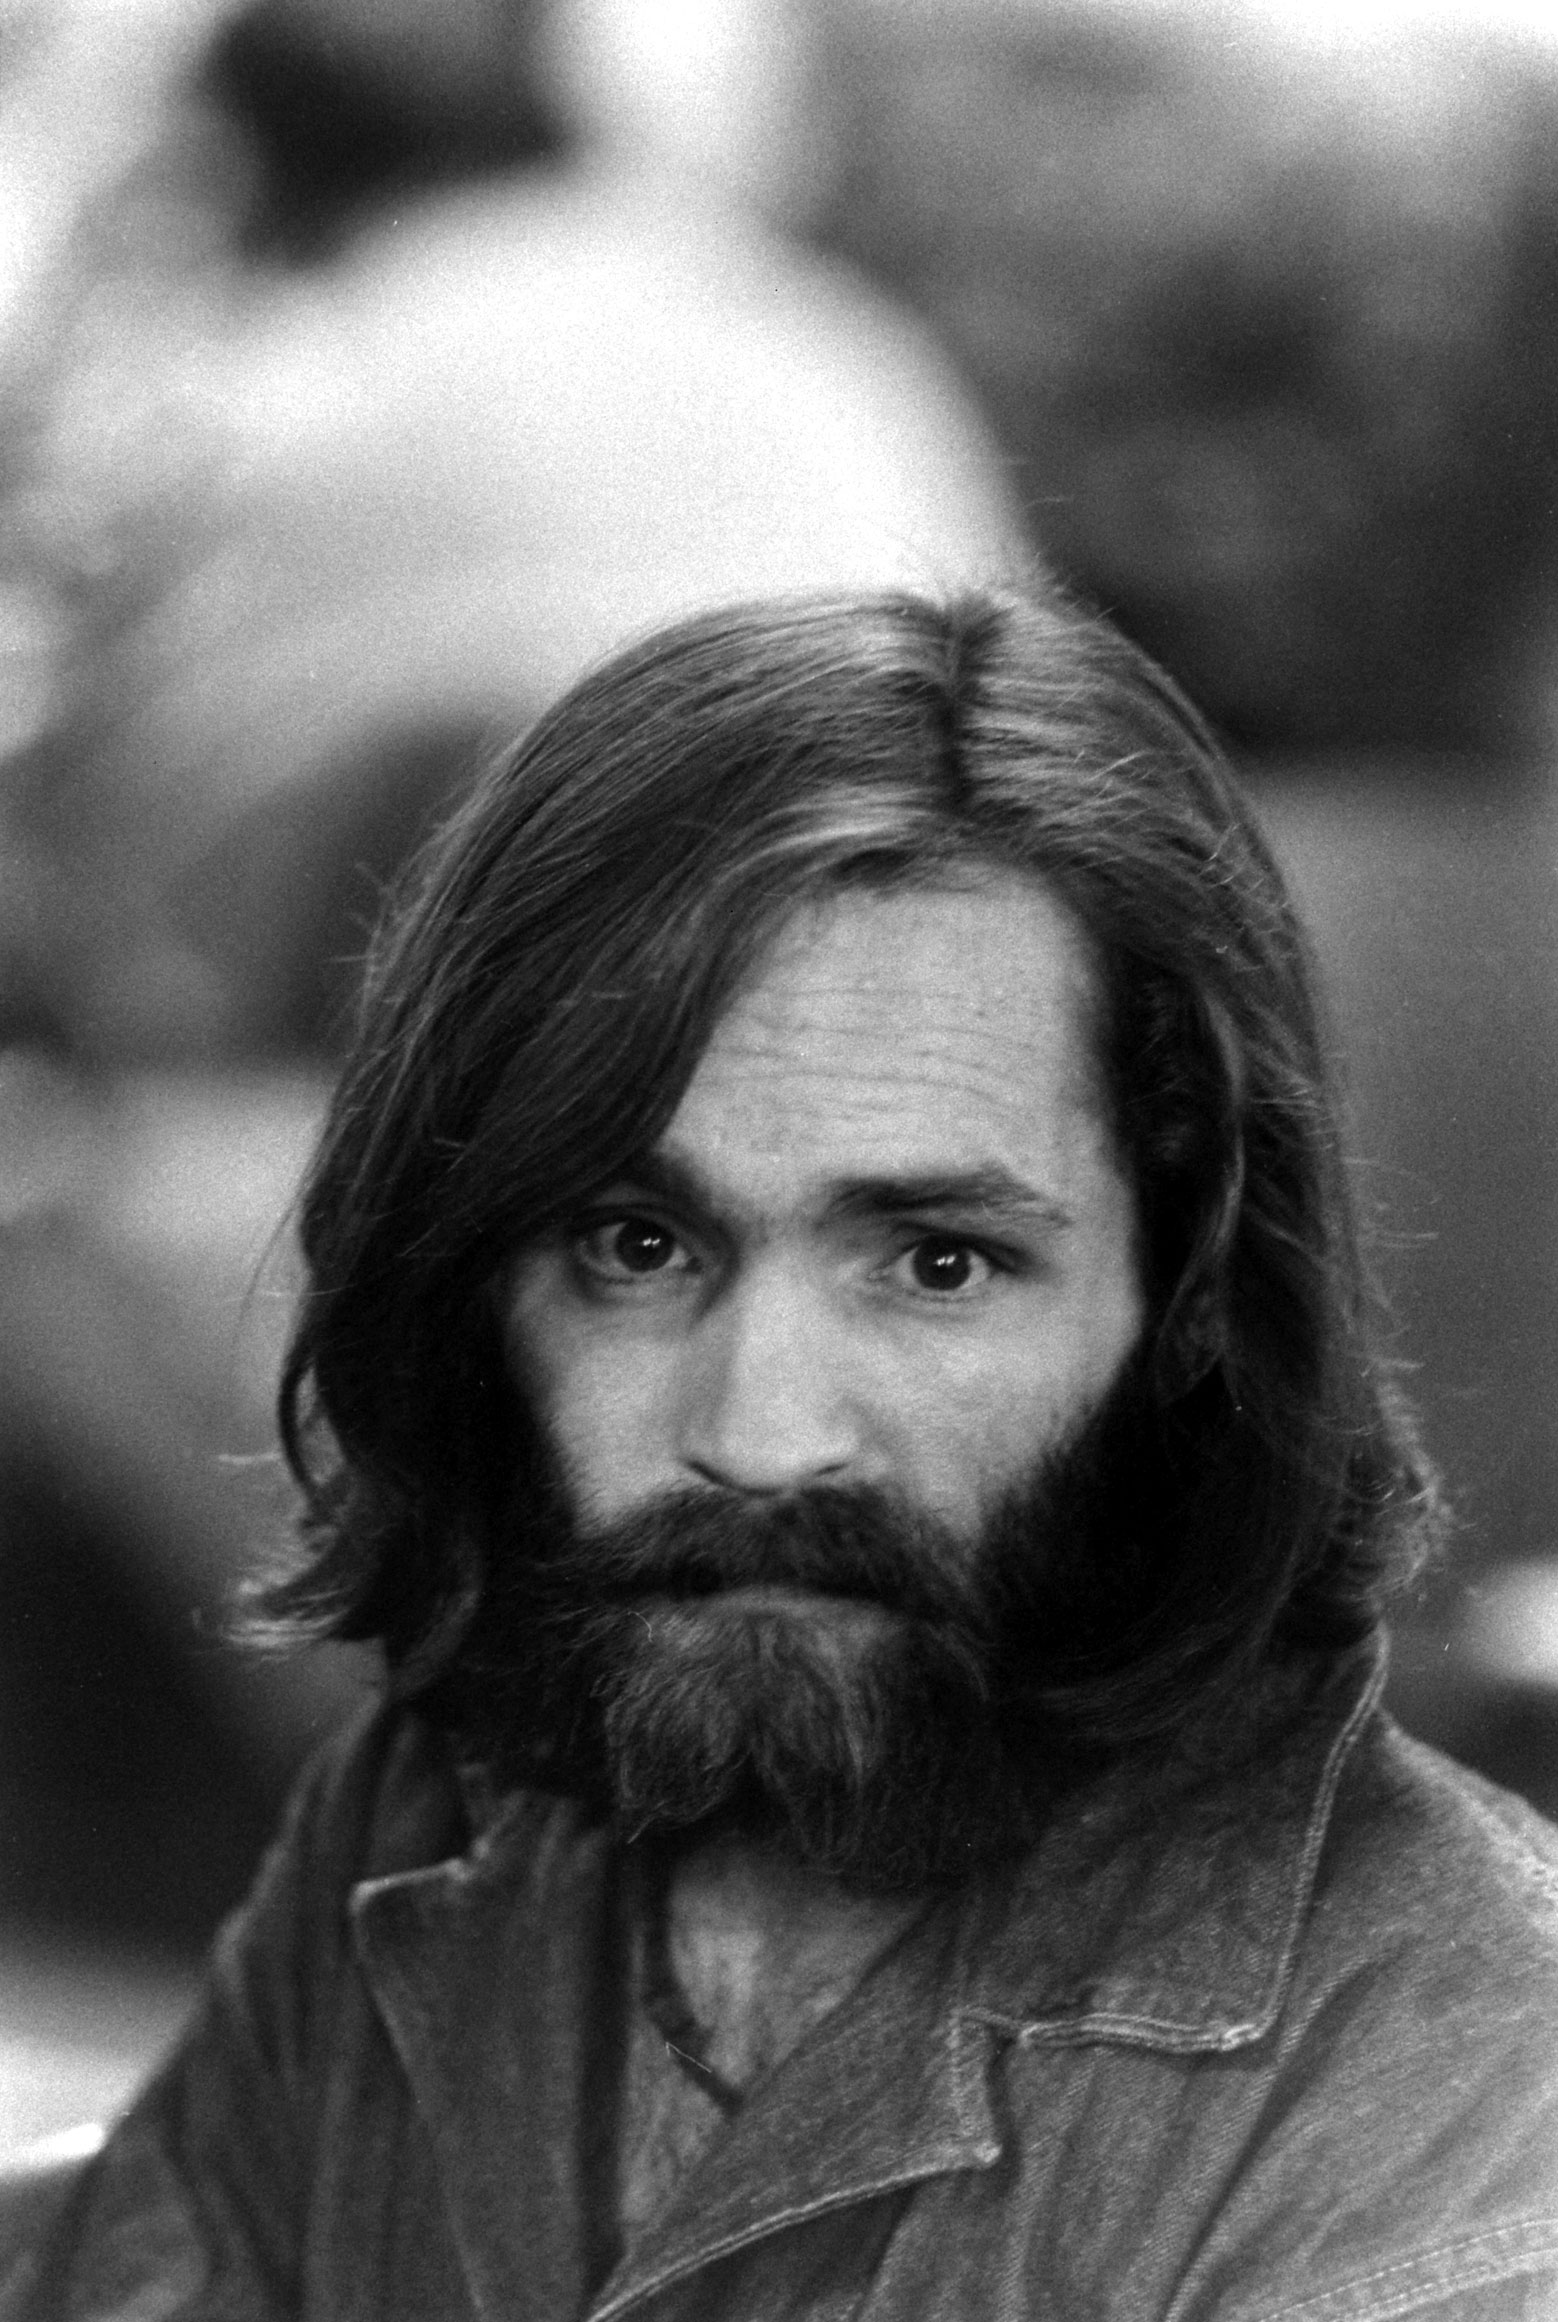 Charles Manson in custody, 1969.